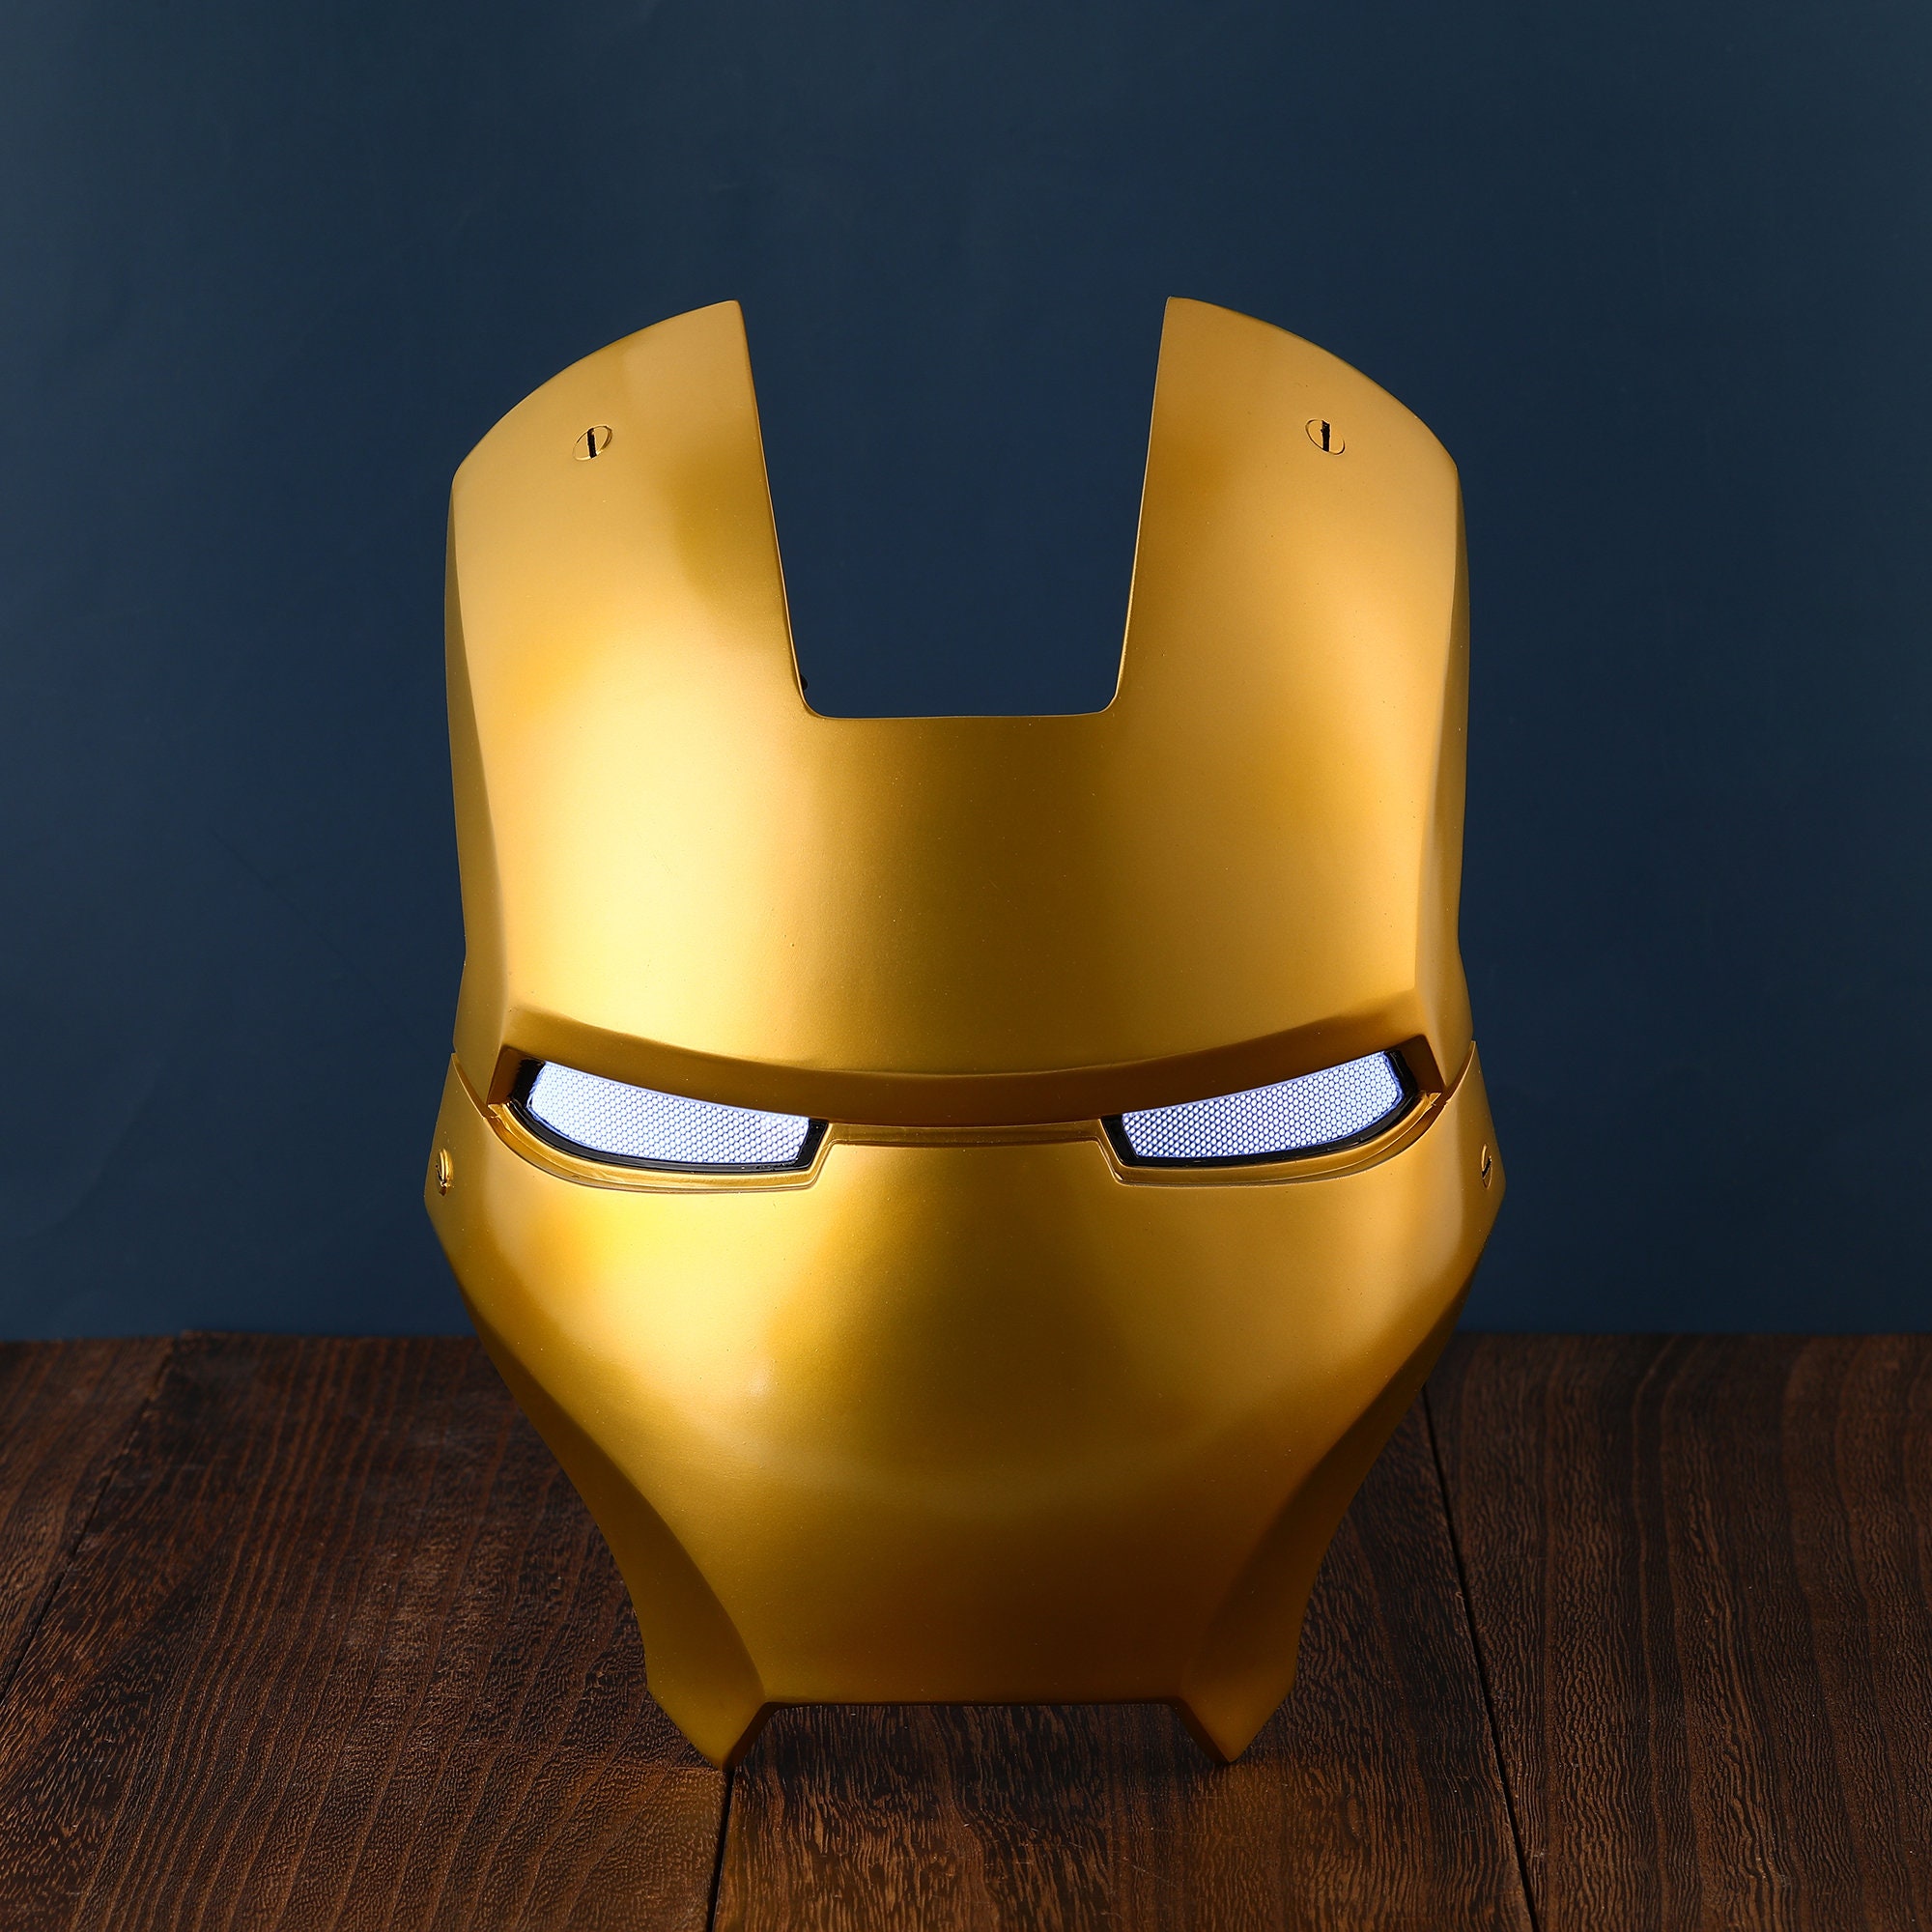 Masque Iron Man - Espace fete